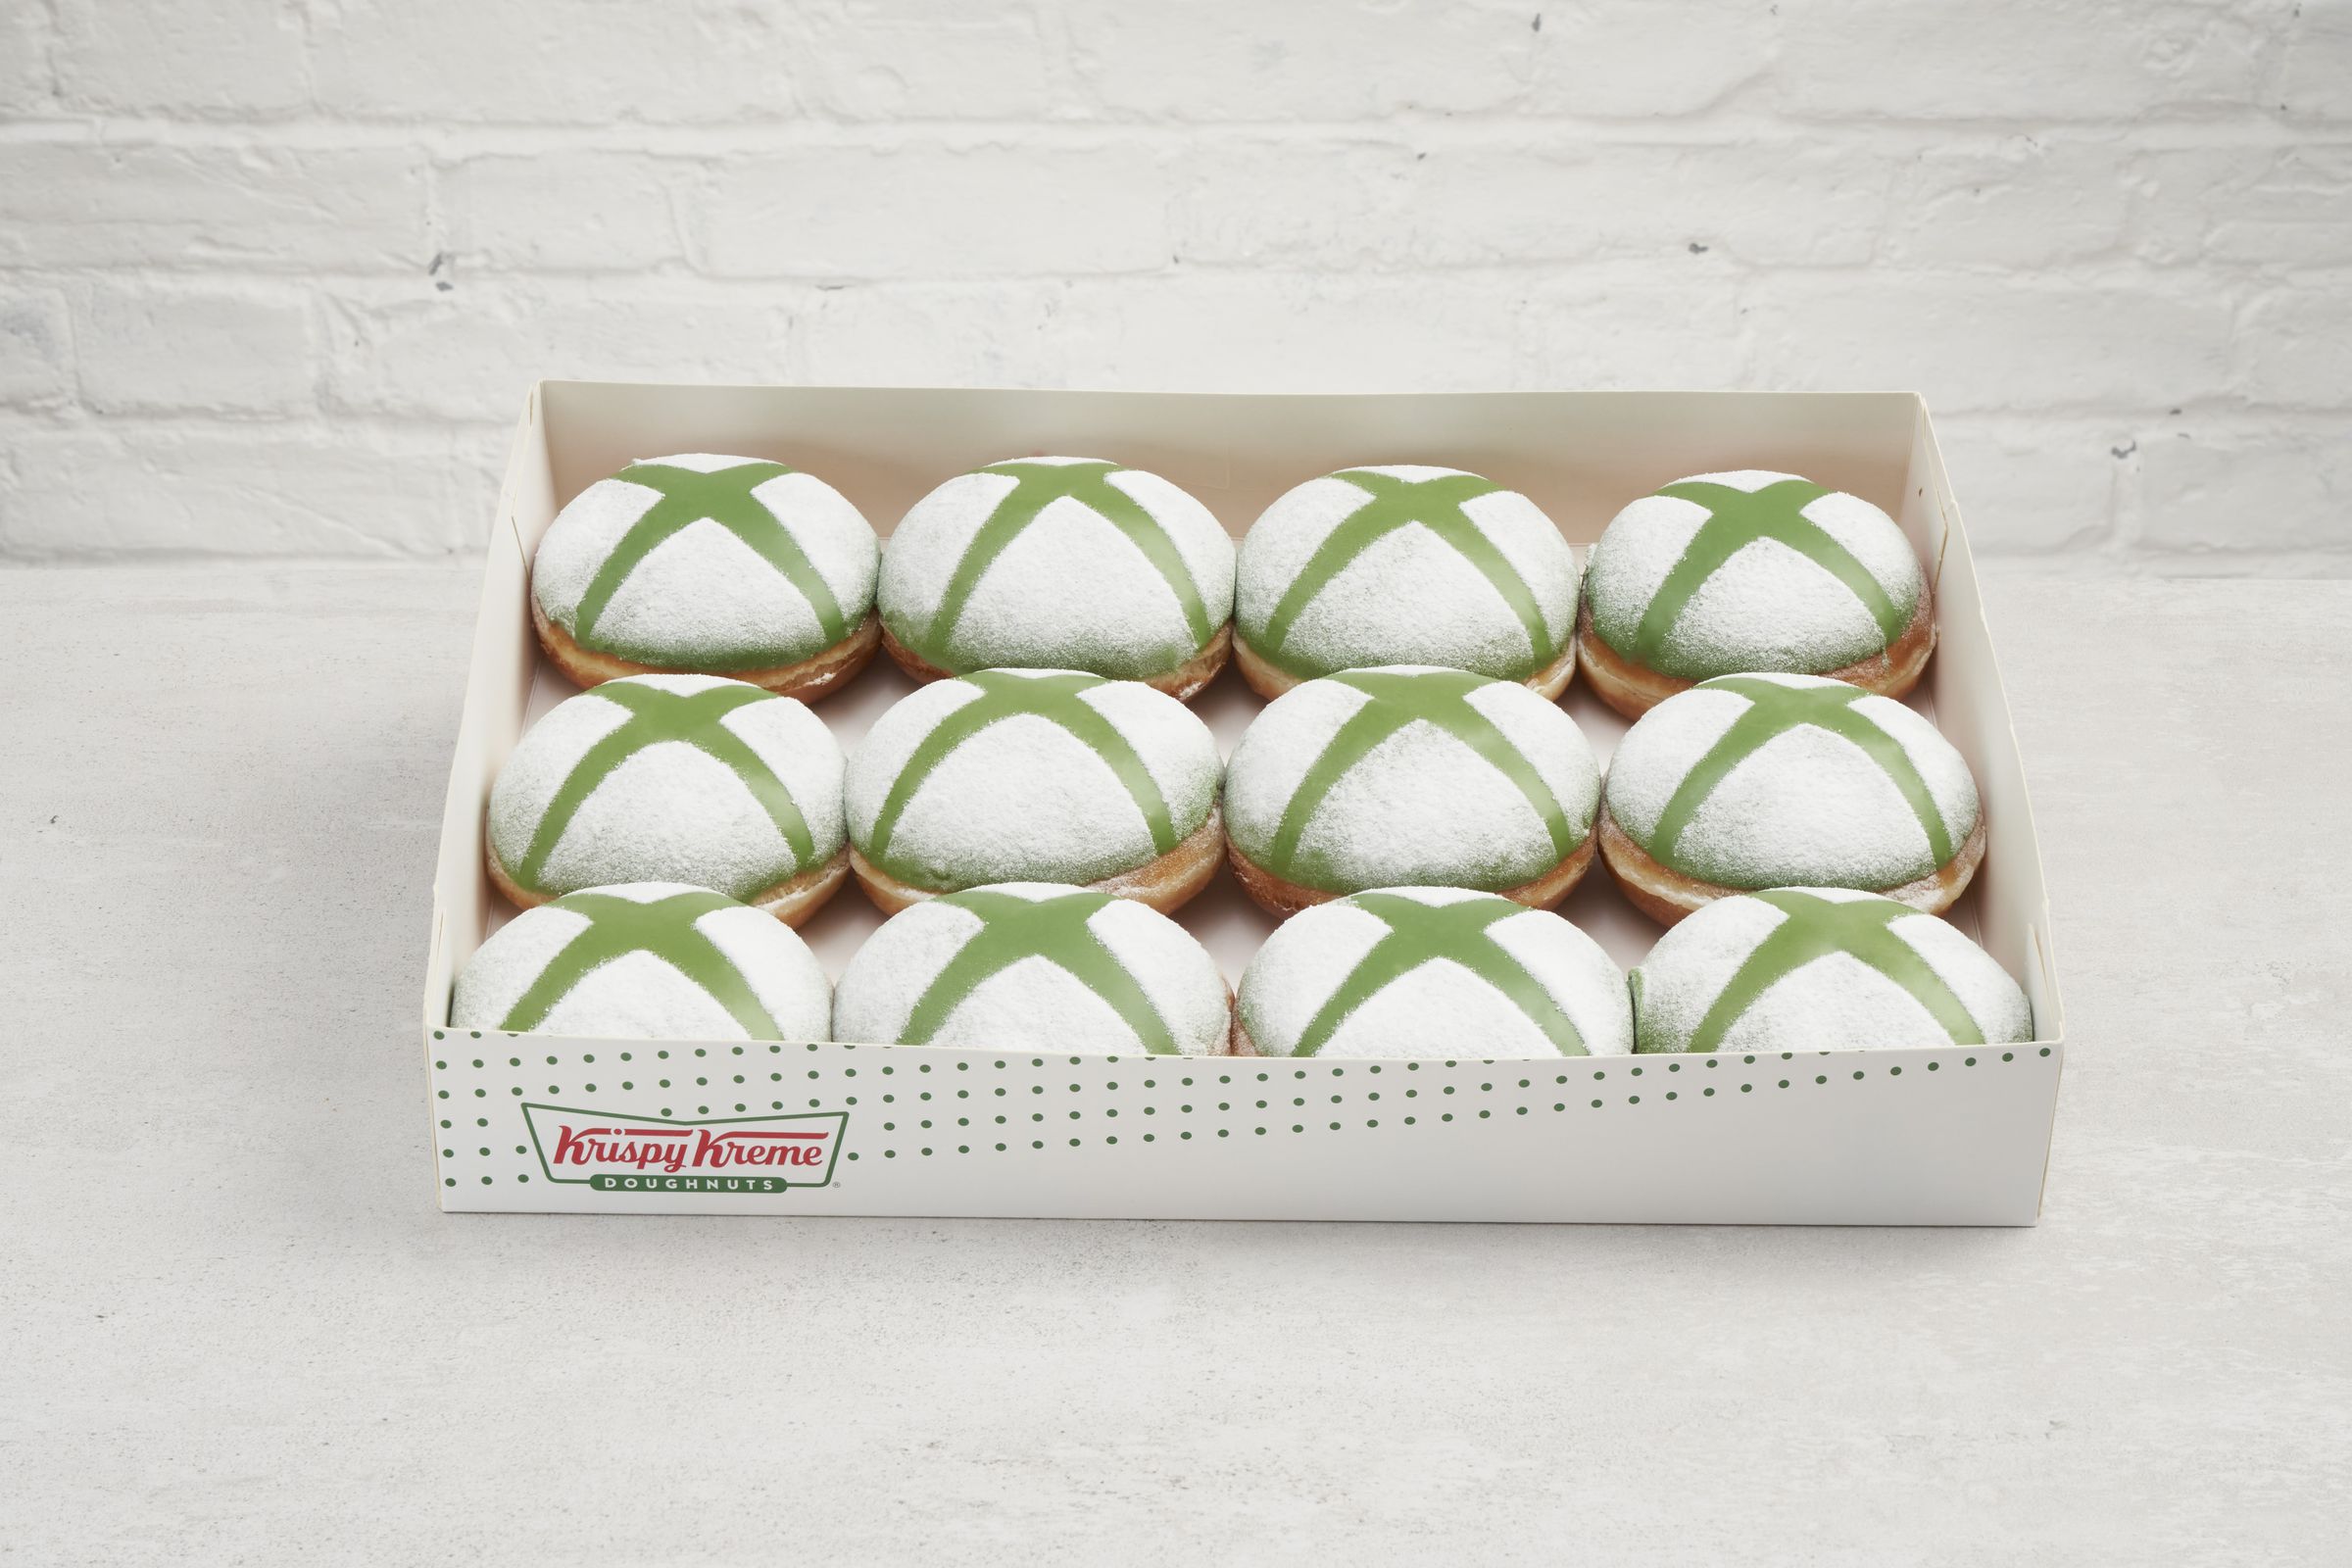 Krispy Kreme’s new Xbox doughnut.